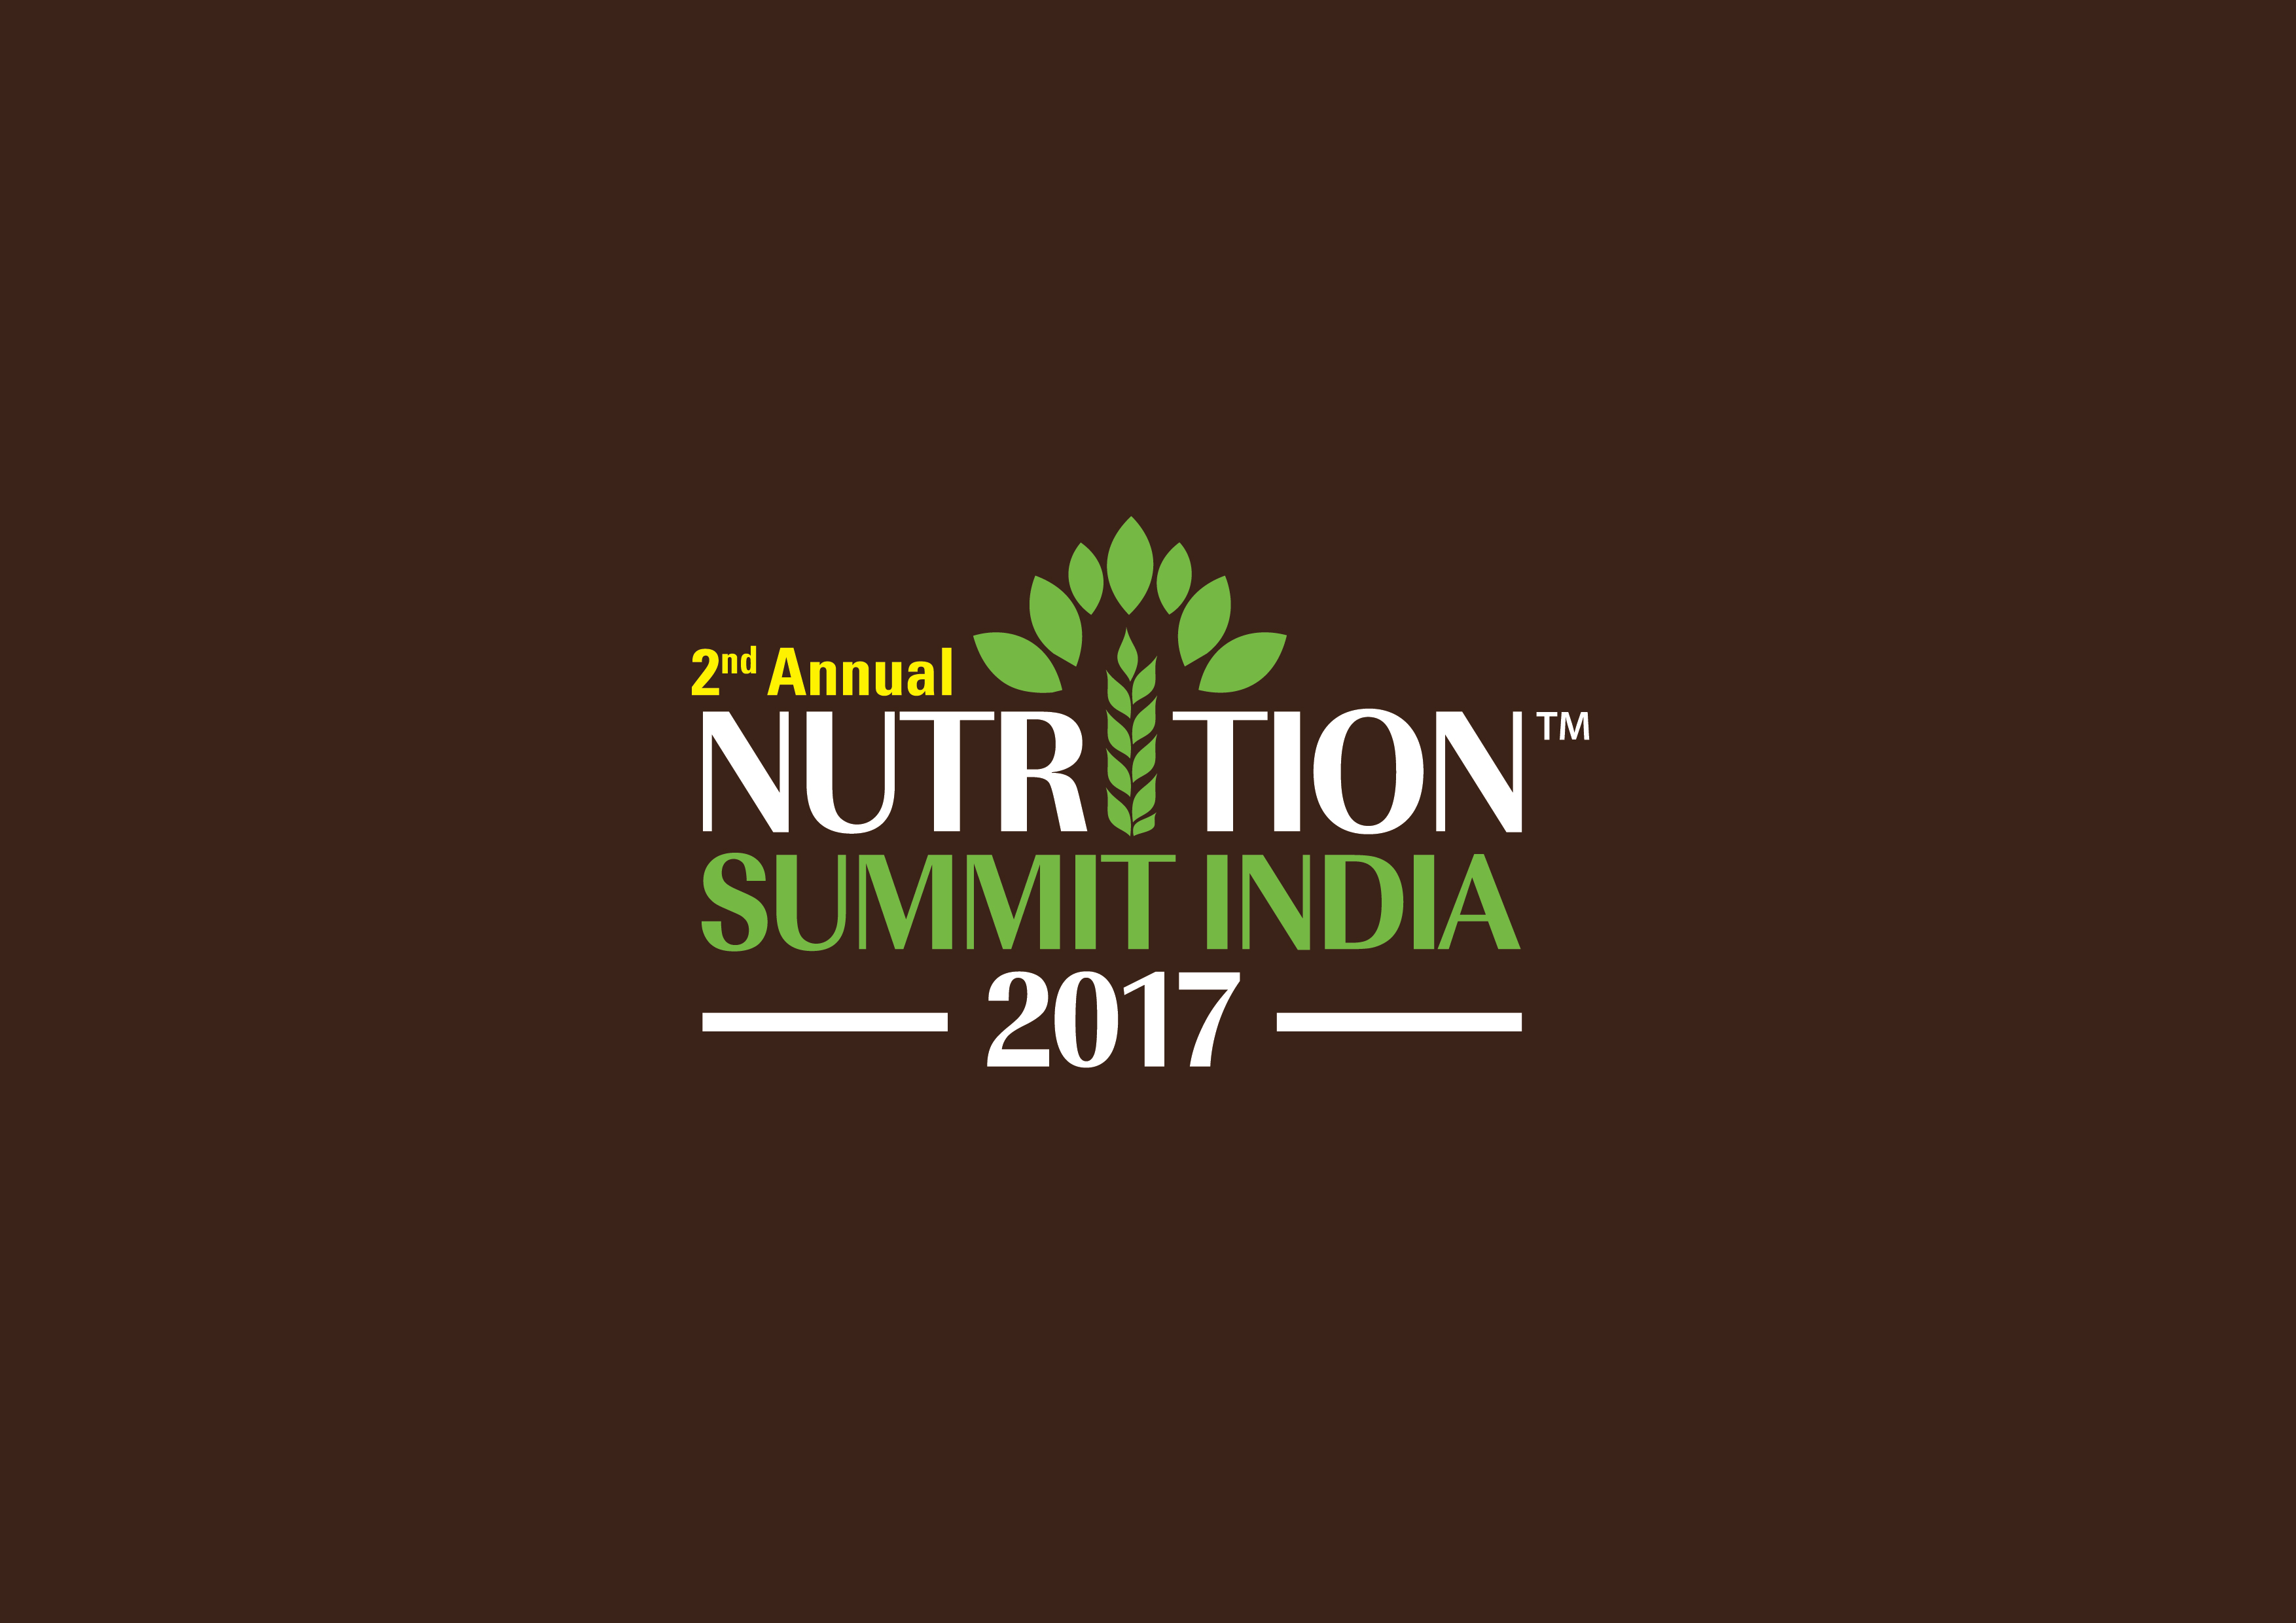 2nd Annual Nutrition Summit India 2017, Mumbai, Maharashtra, India